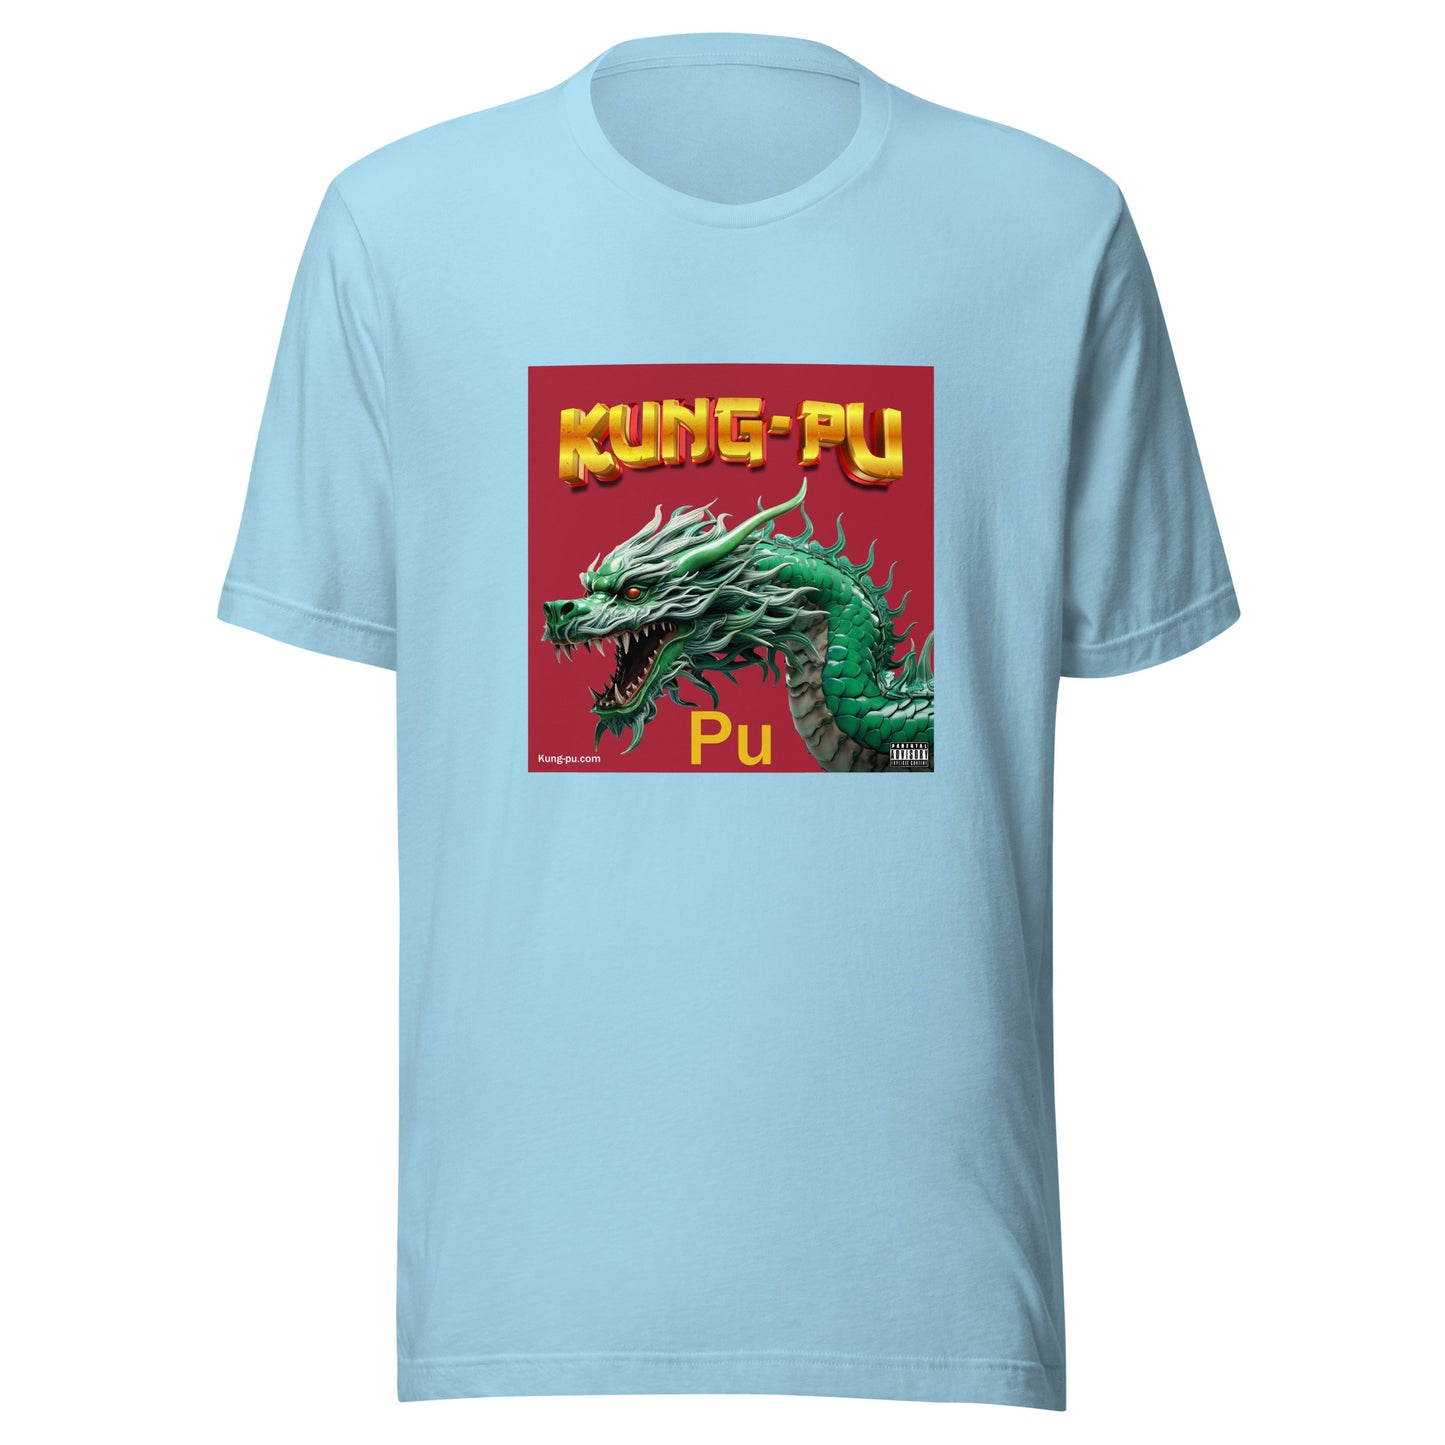 Pu - Kung-Pu T-Shirt